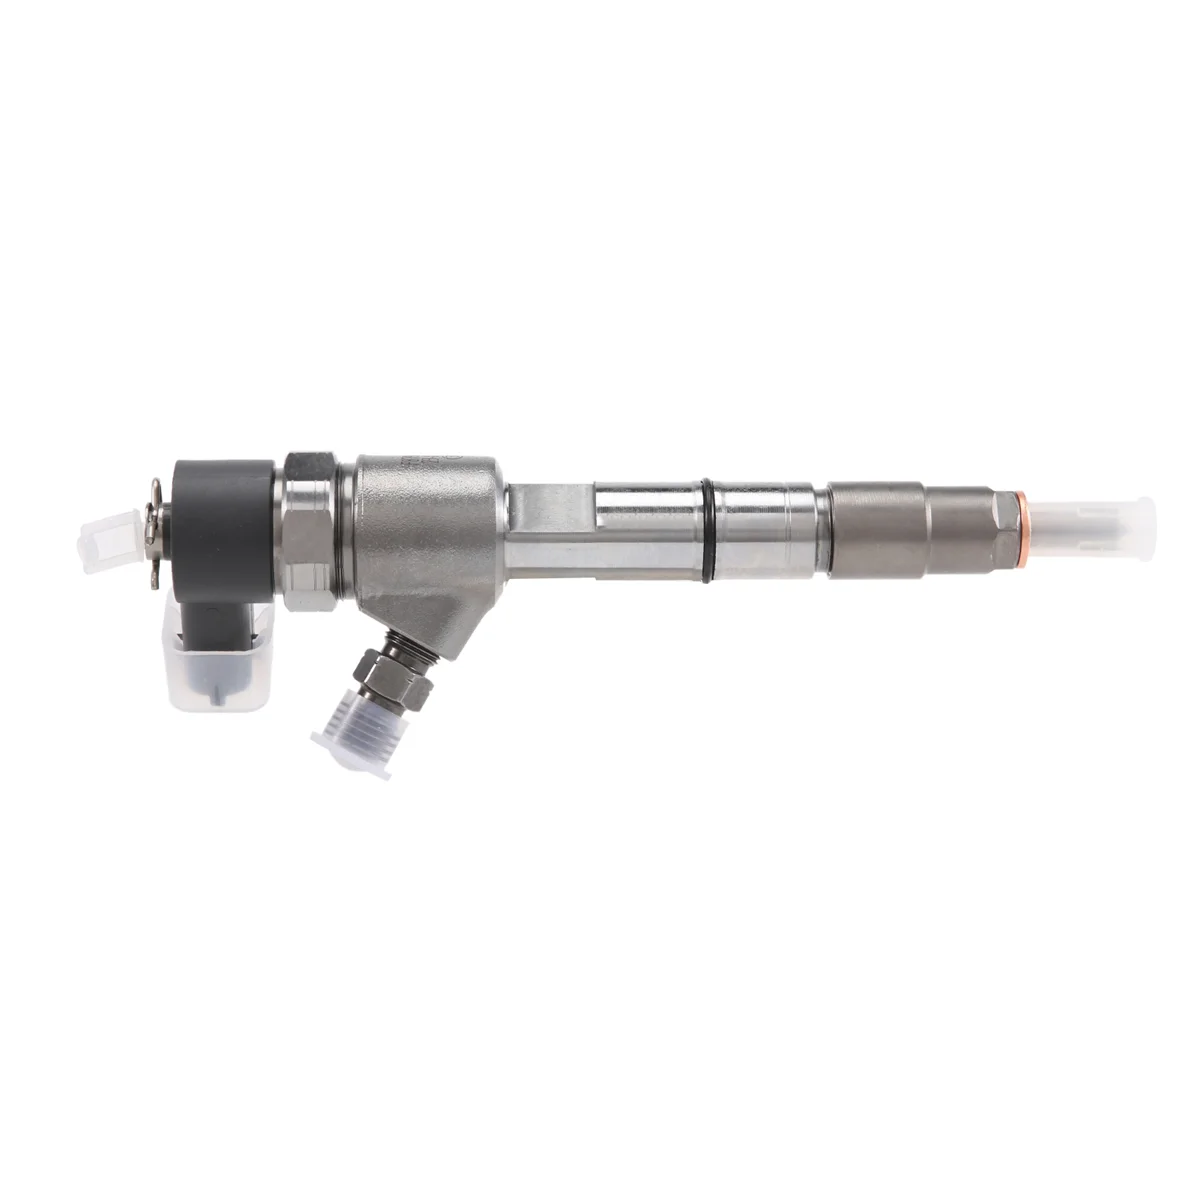 

0445110791 New Crude Oil Fuel Injector Nozzle for Bosch for Quanchai 4D22EA